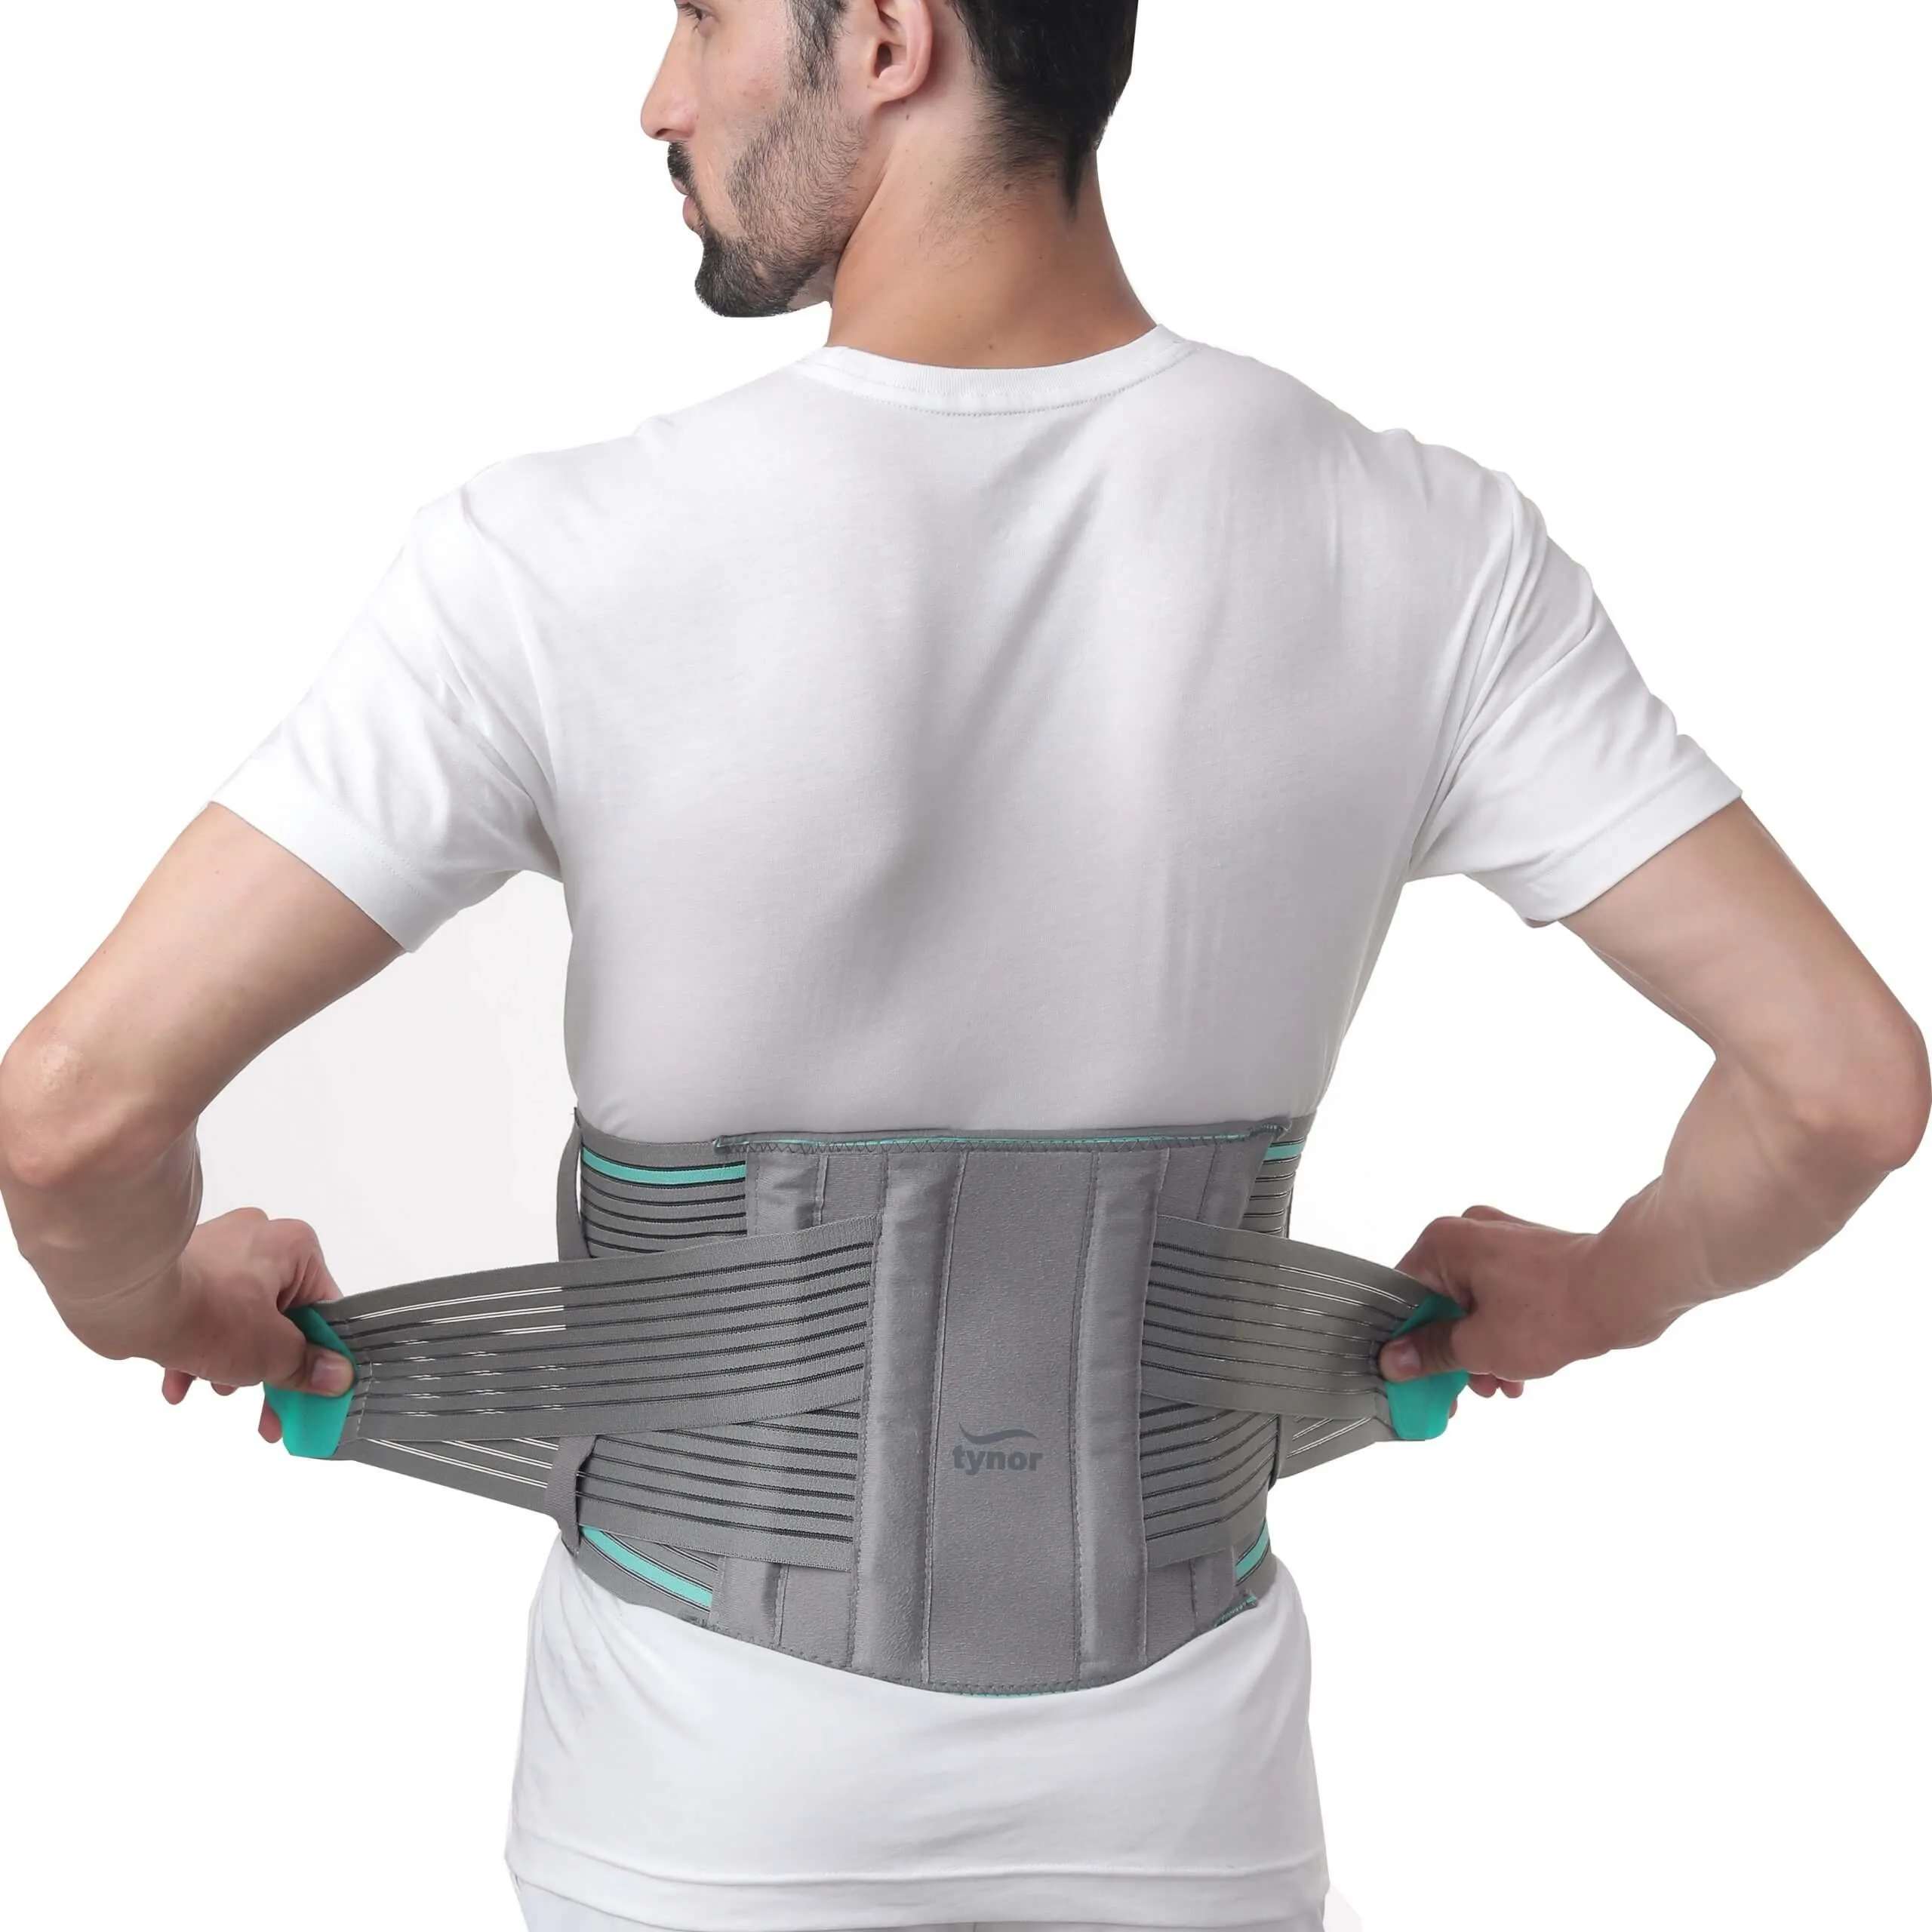 Tynor Lumbar Support Belt